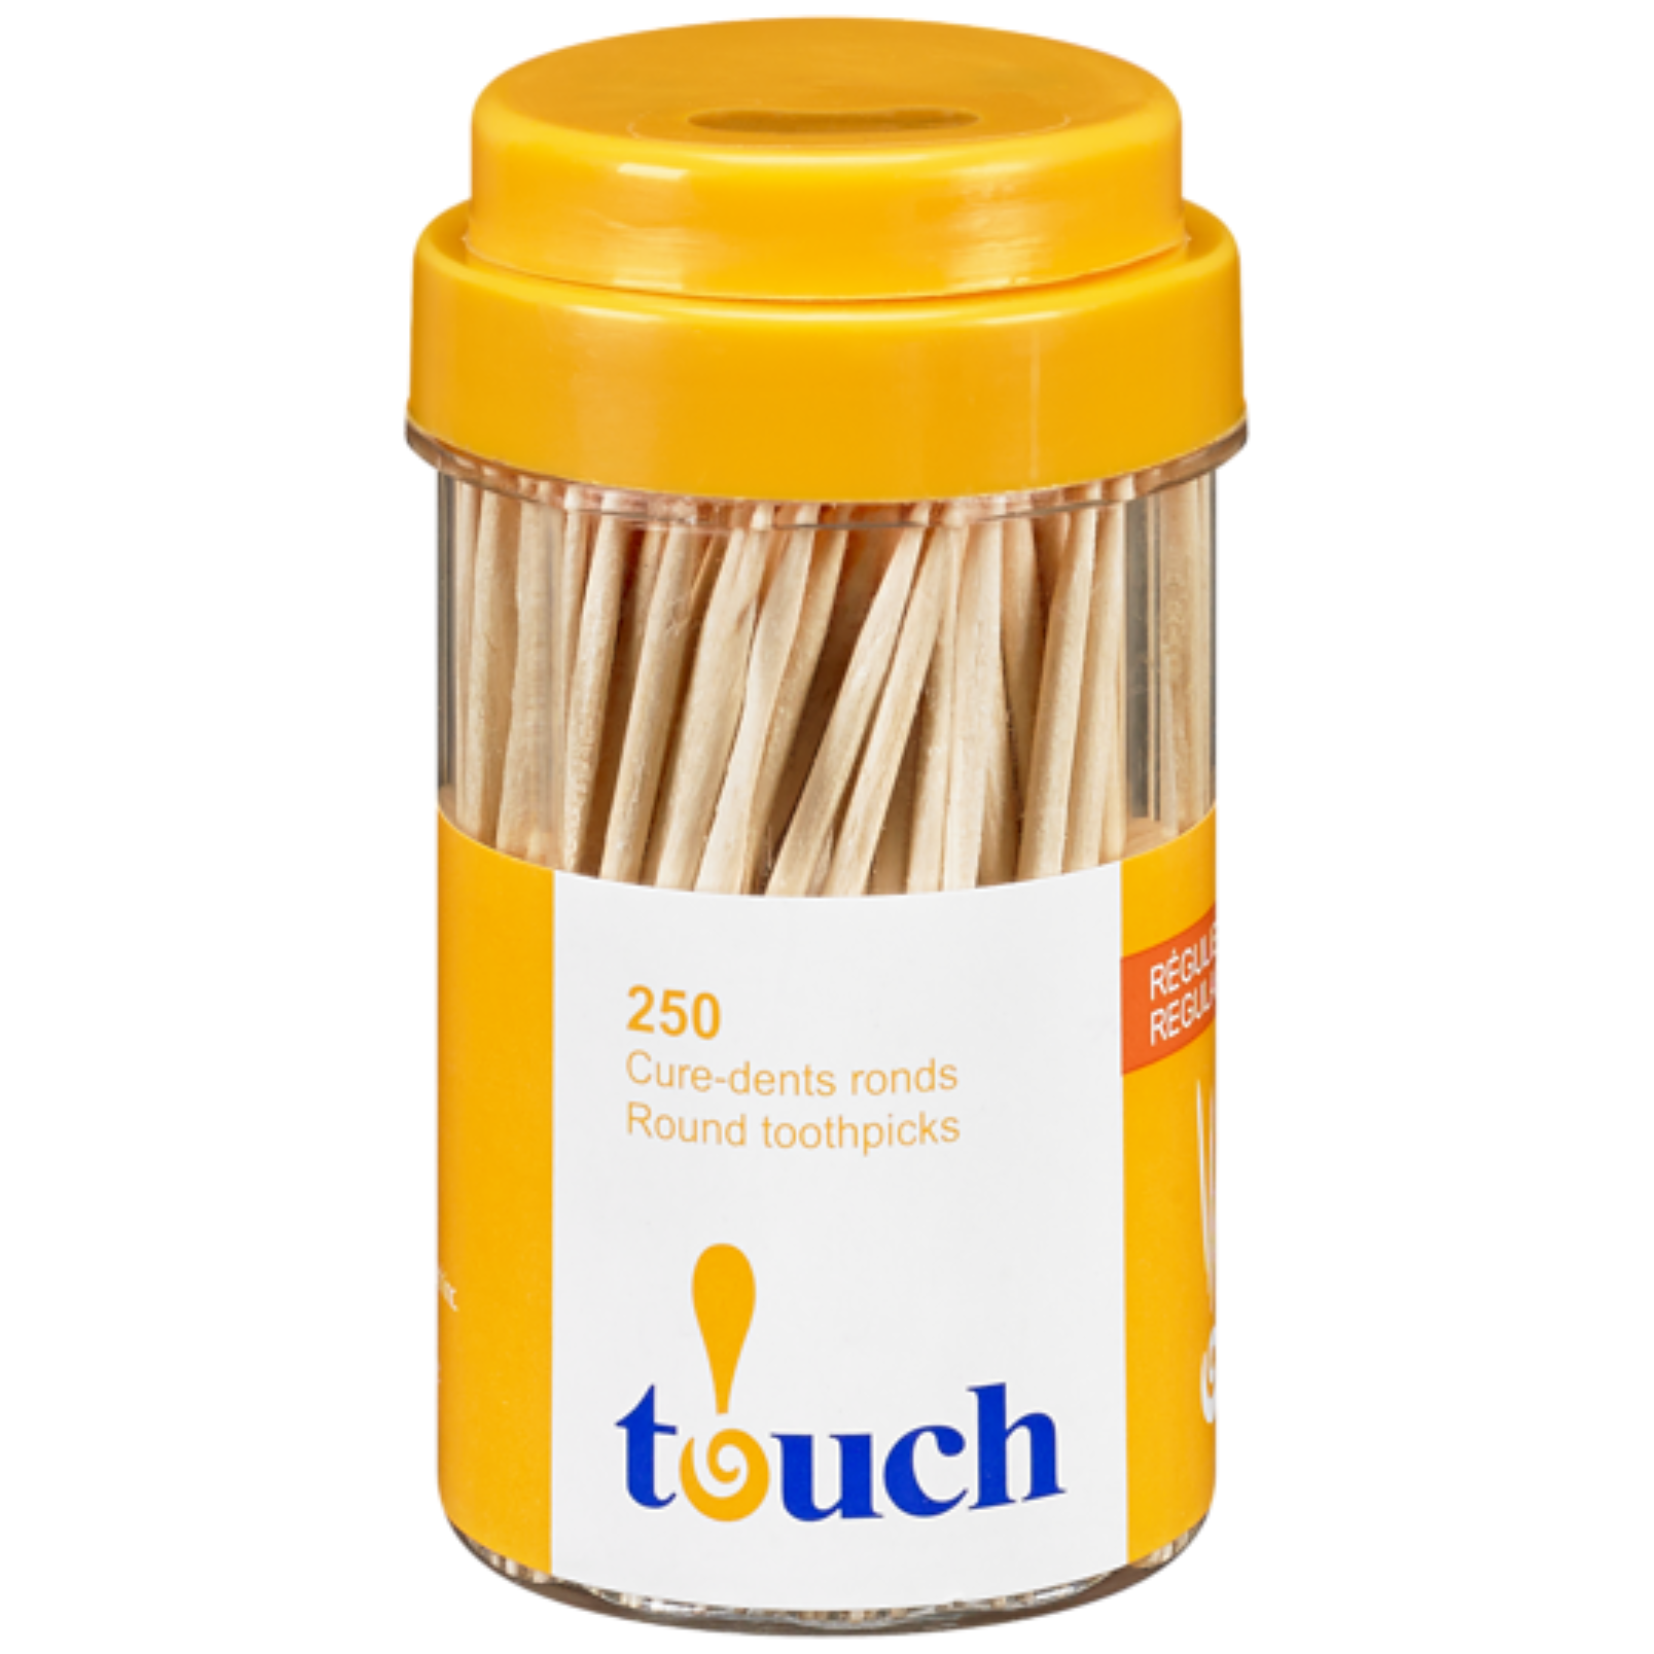 Touch Round Toothpicks Regular 250ct